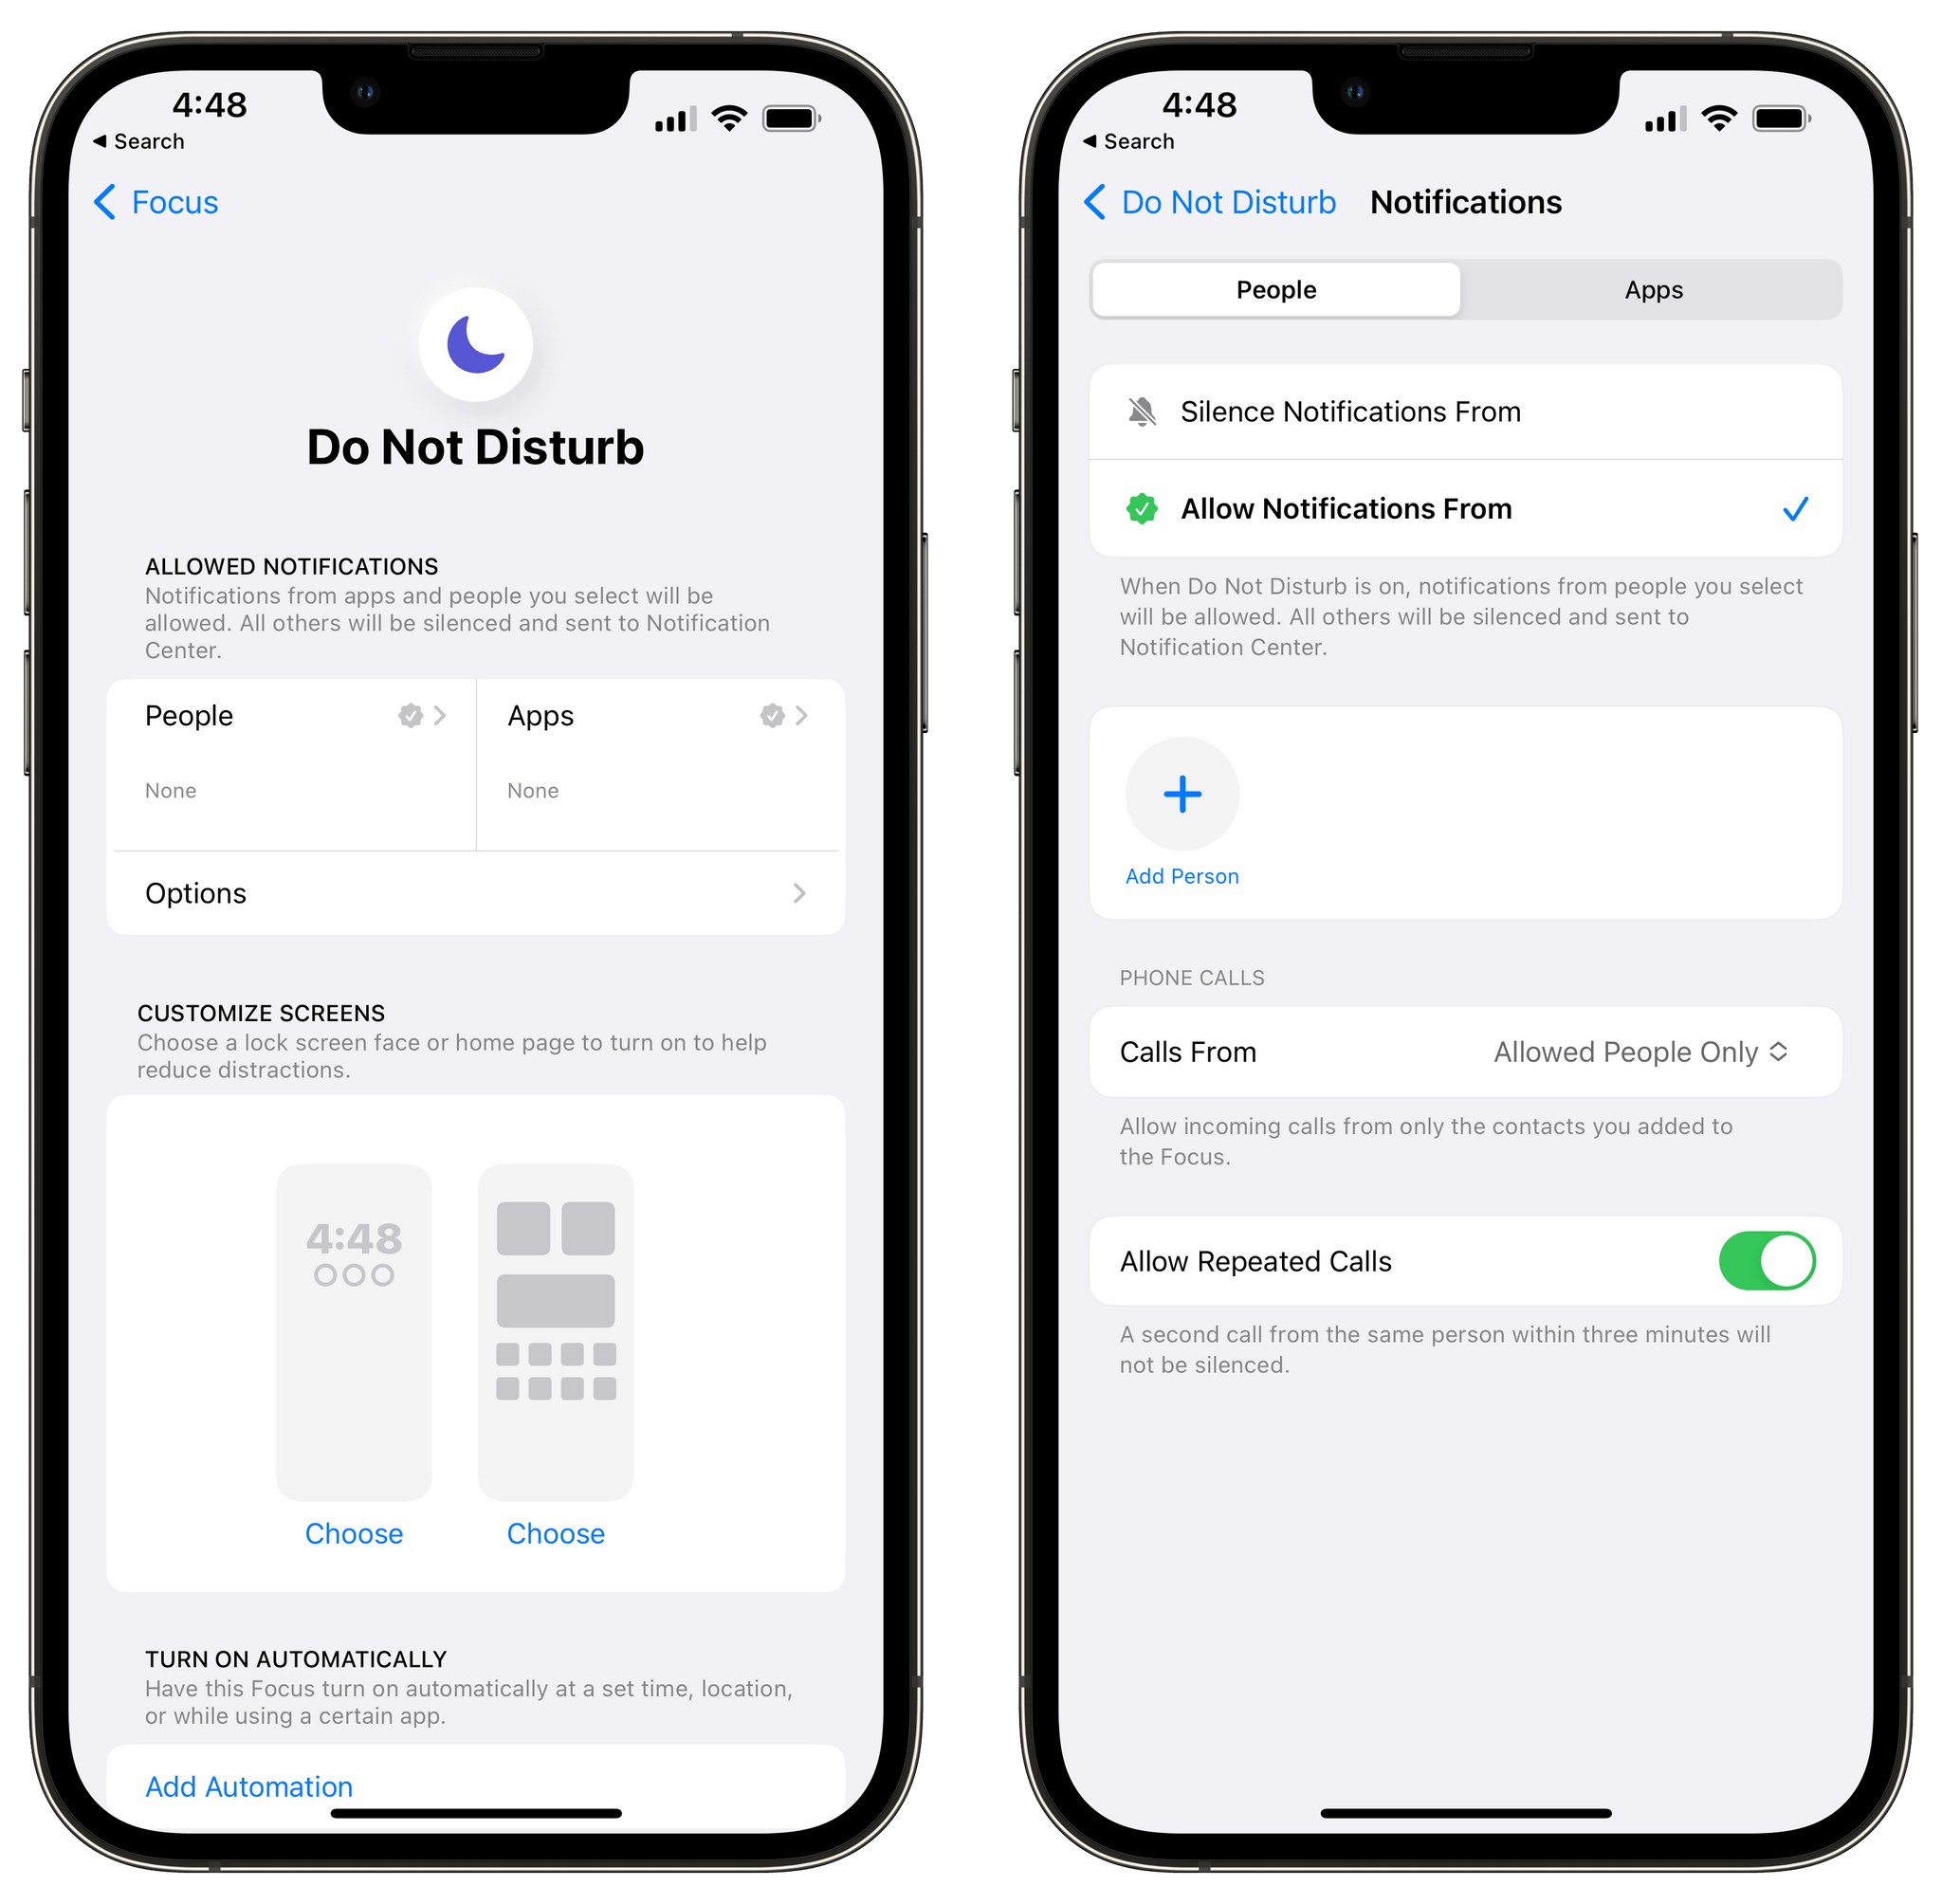 New Focus settings in iOS 16.